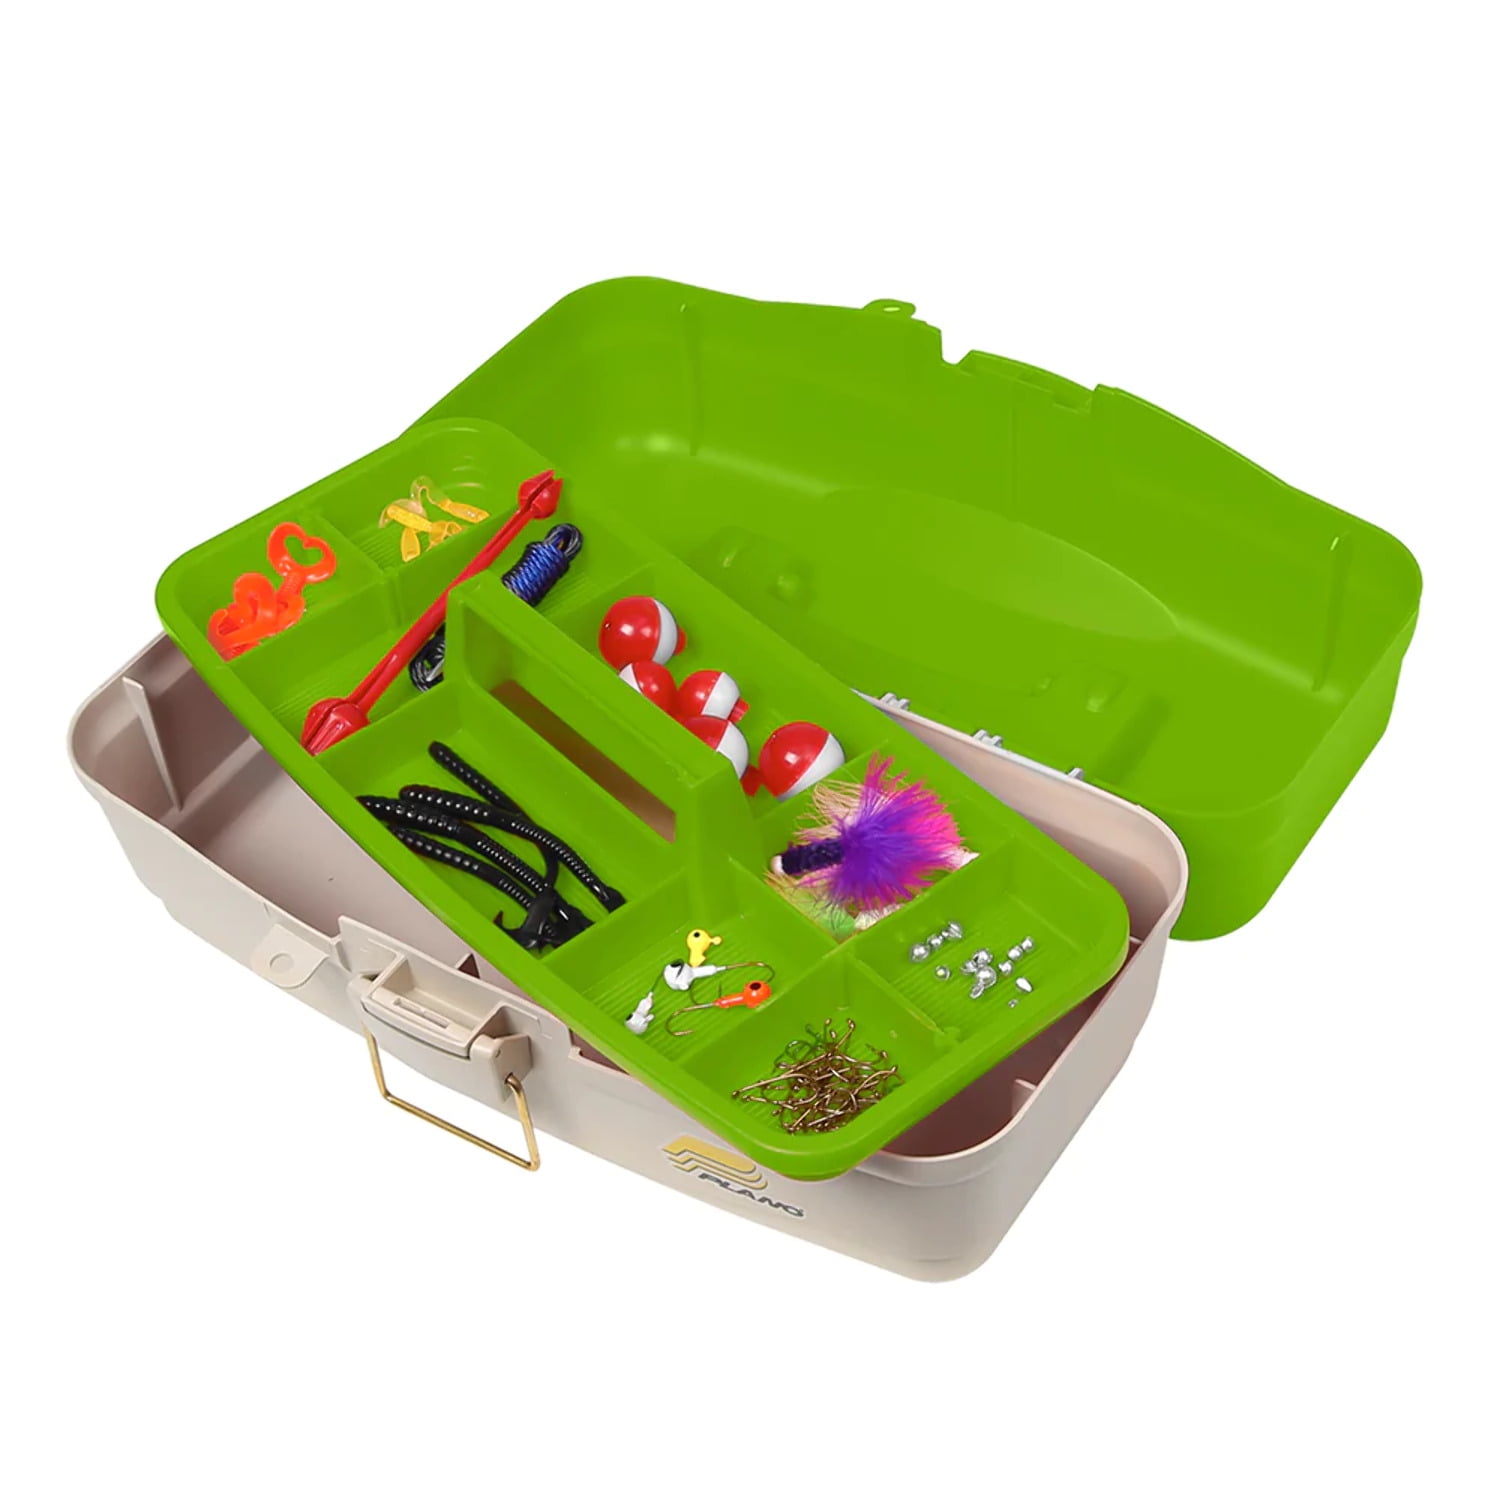 Plano Two Tray Fishing Tackle Box - Model: 6202-92 - Pink